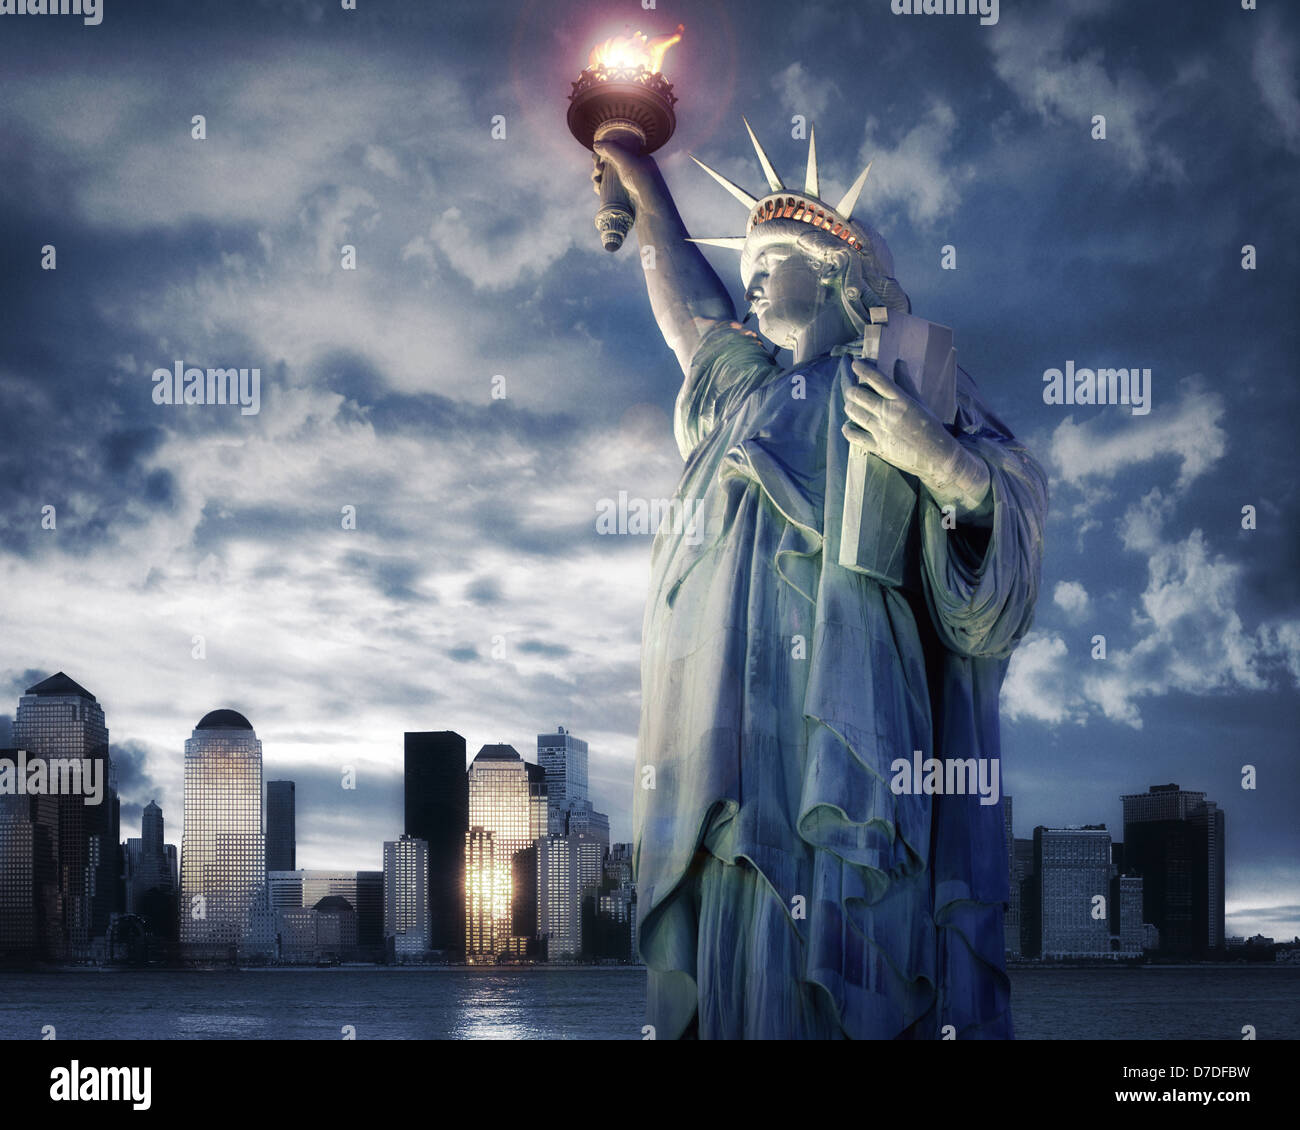 USA - NEW YORK: Travel Concept Stock Photo